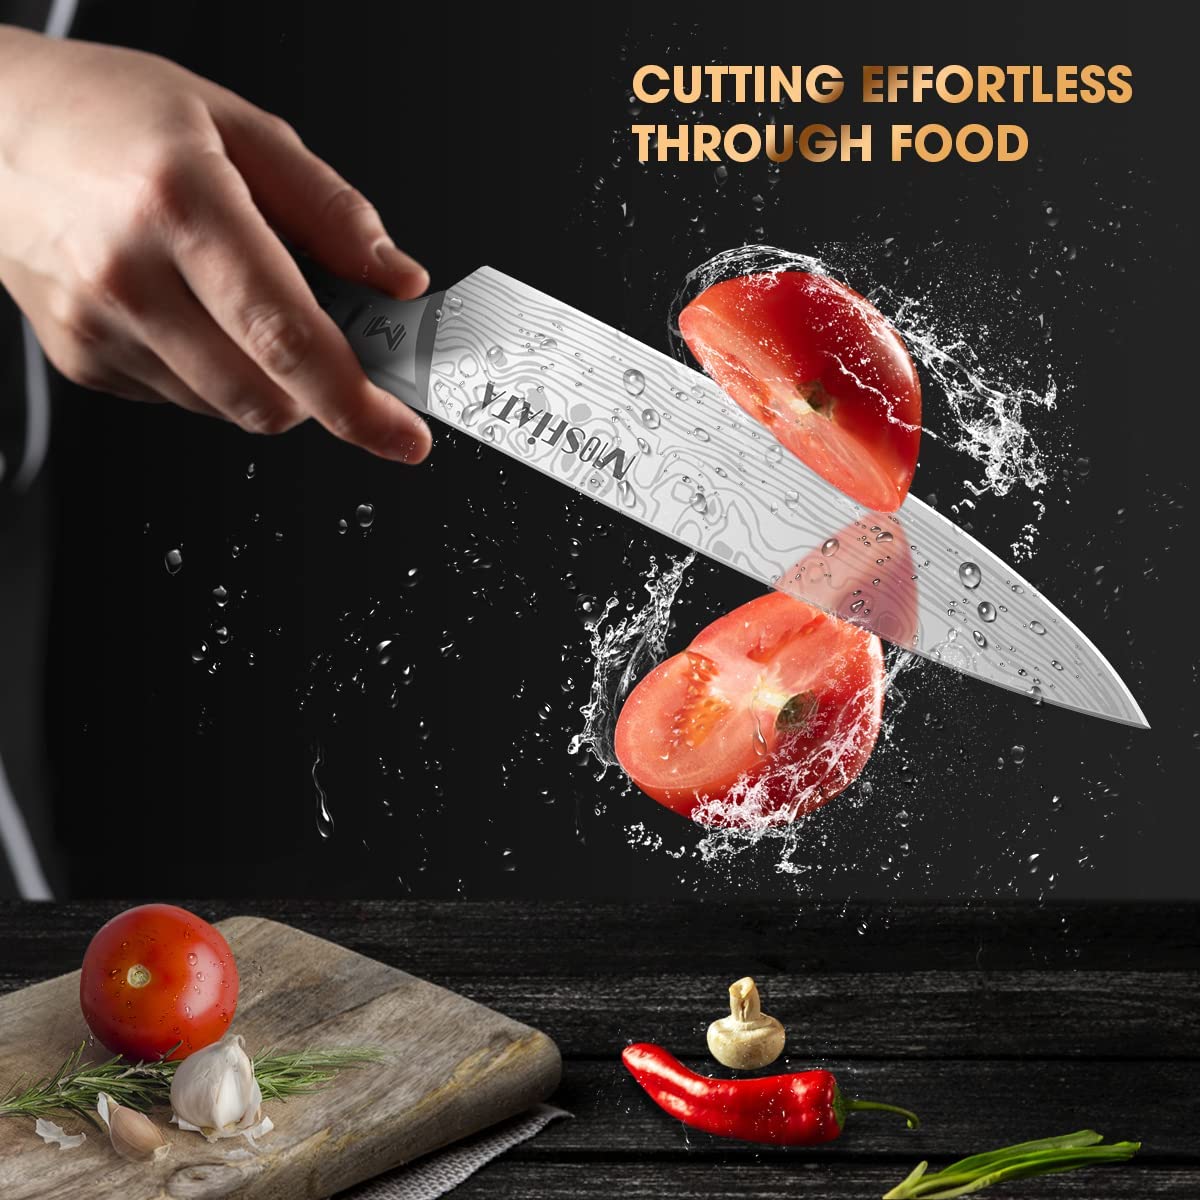  MOSFiATA 5 PCS Chef Knife Set, German High Carbon